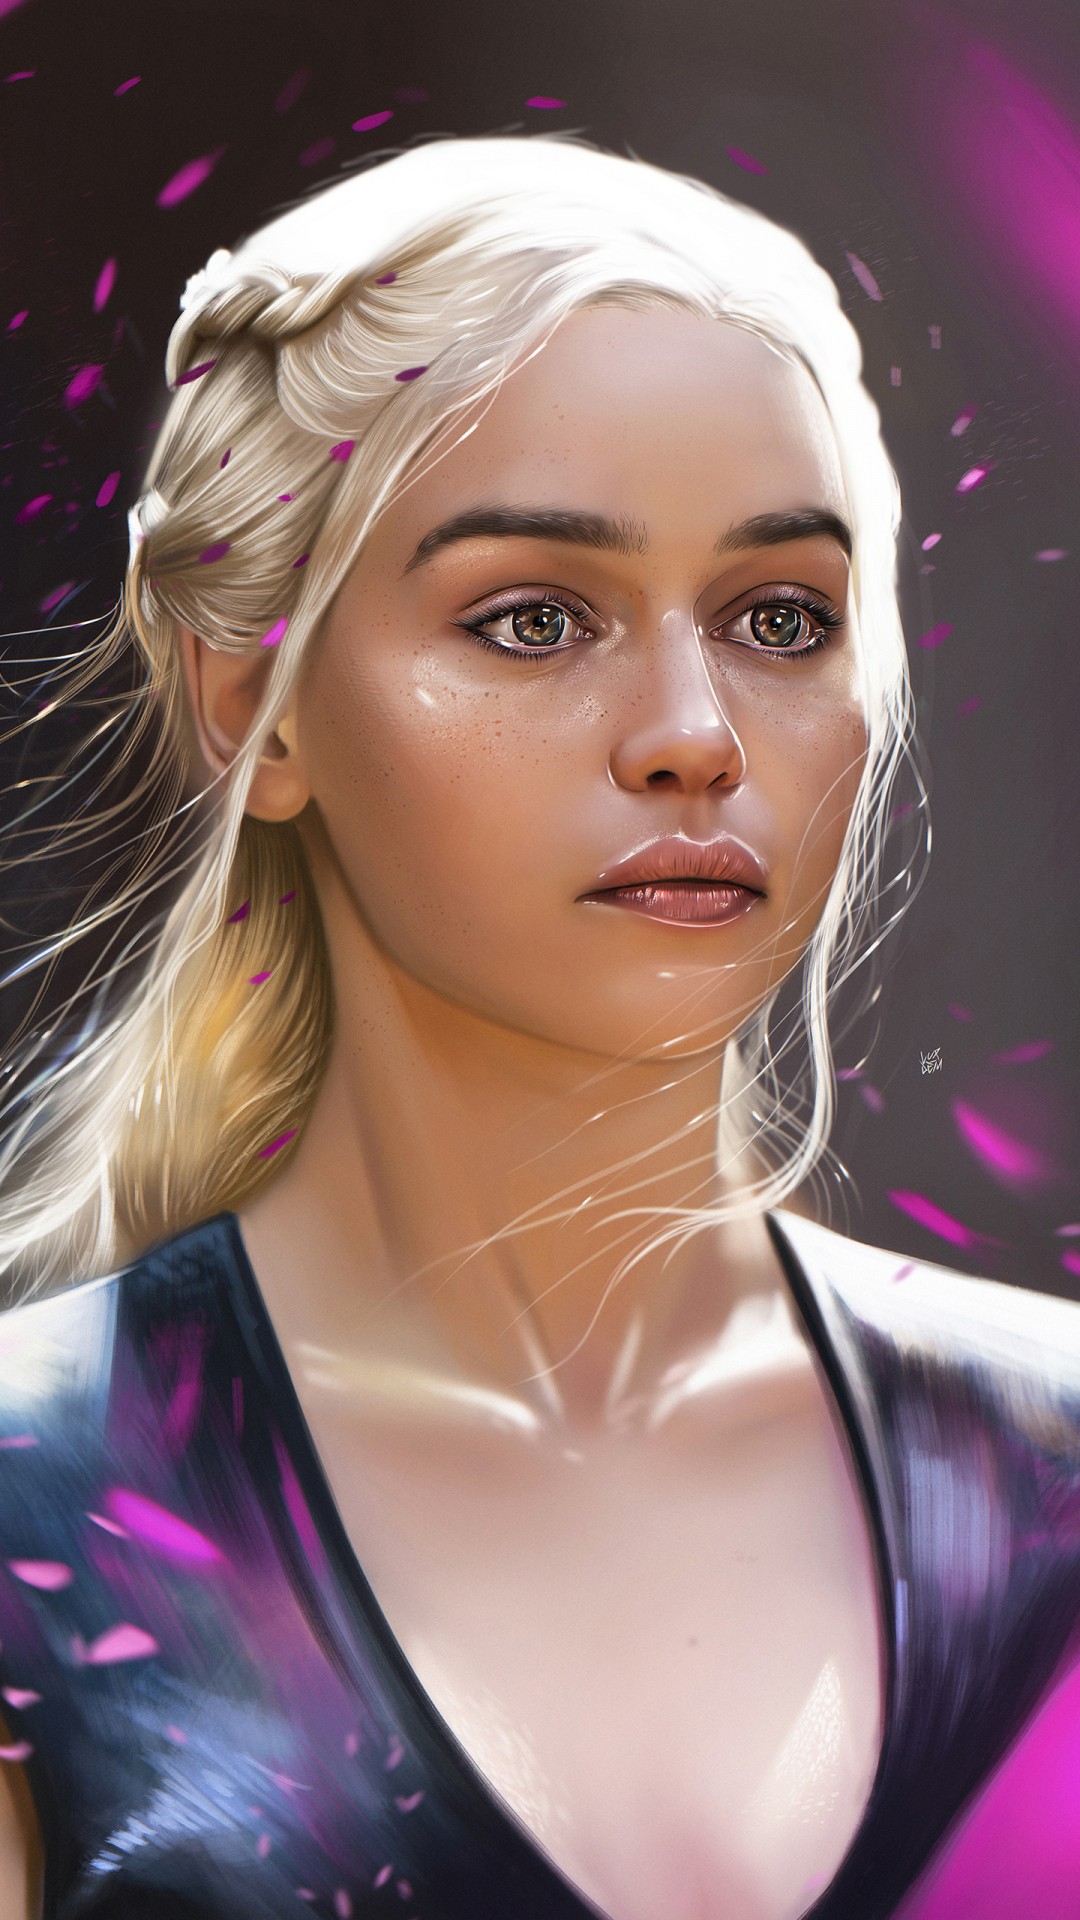 khaleesi wallpaper,hair,face,eyebrow,blond,hairstyle